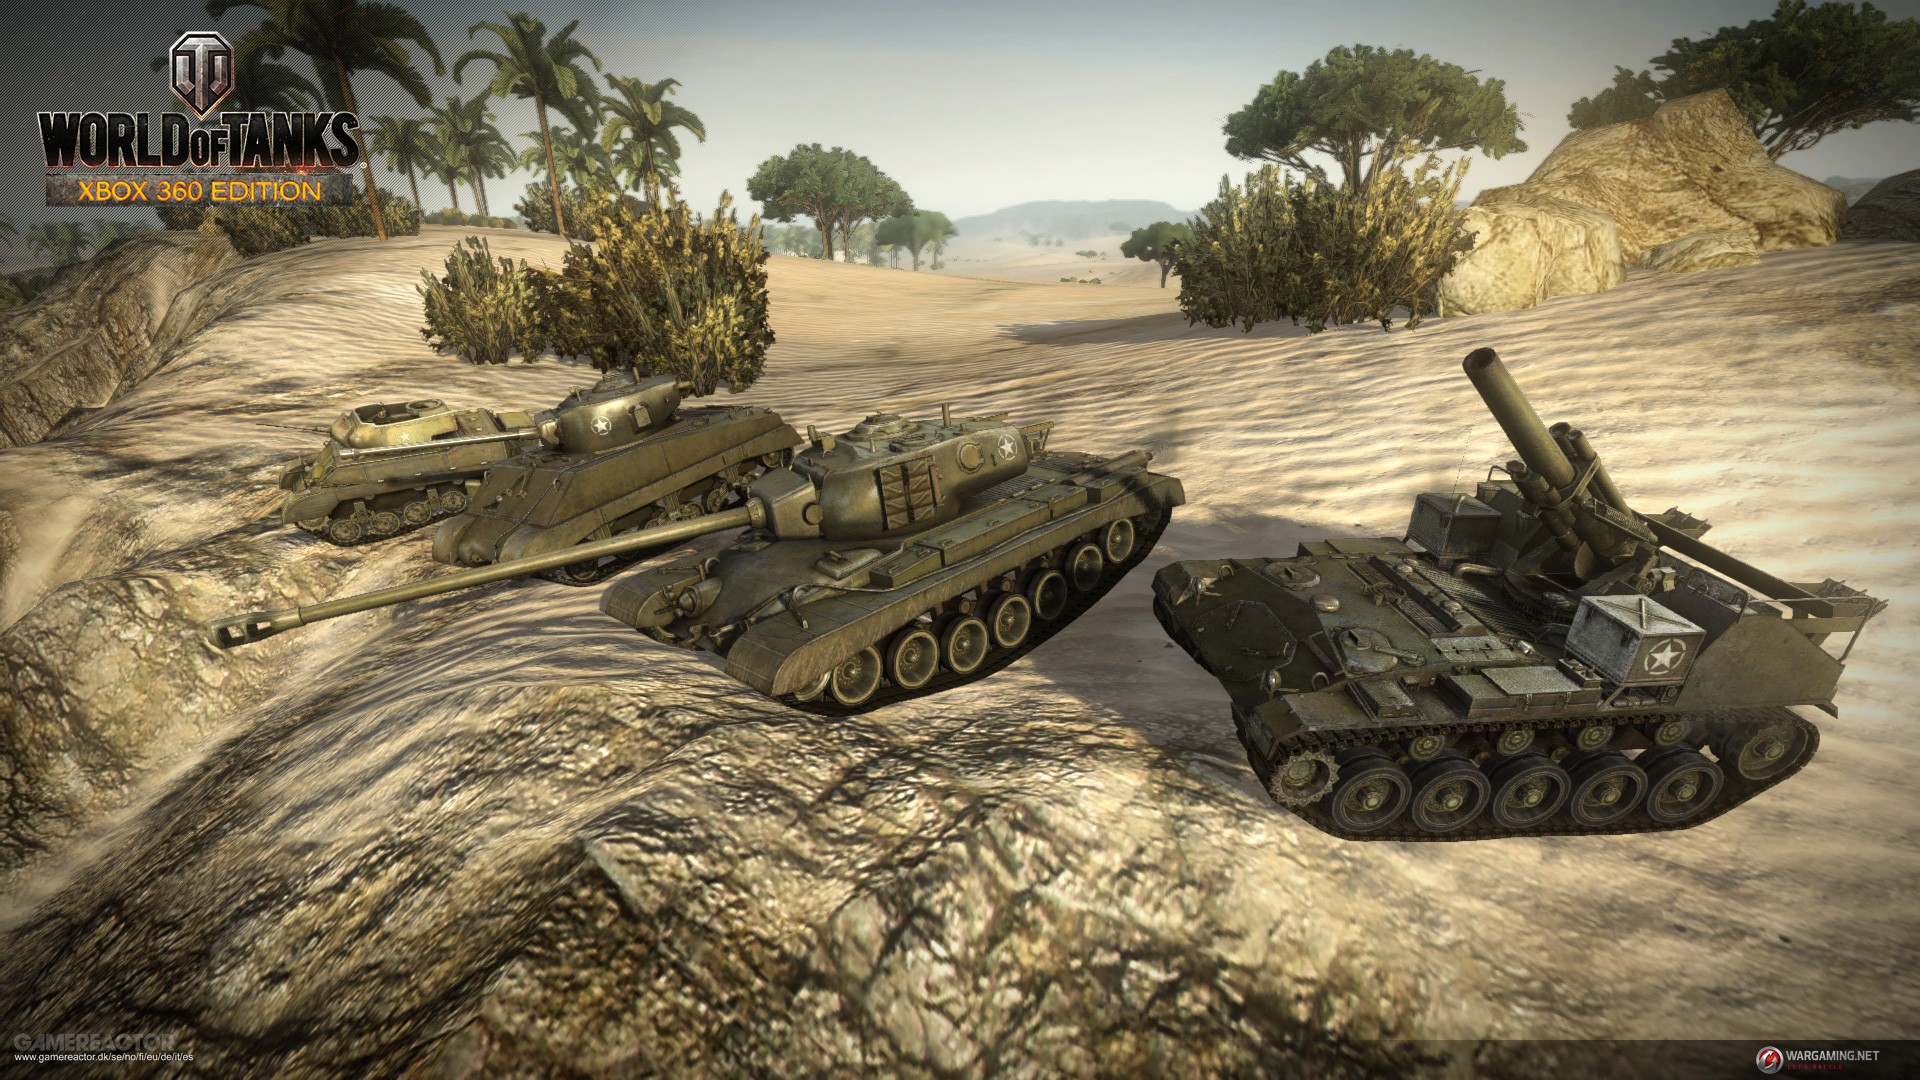 World of tanks 360. World of Tanks Xbox 360. ИС 360 танк в World of Tanks. Мир танков на иксбокс 360. World of Tanks Console Xbox 360.